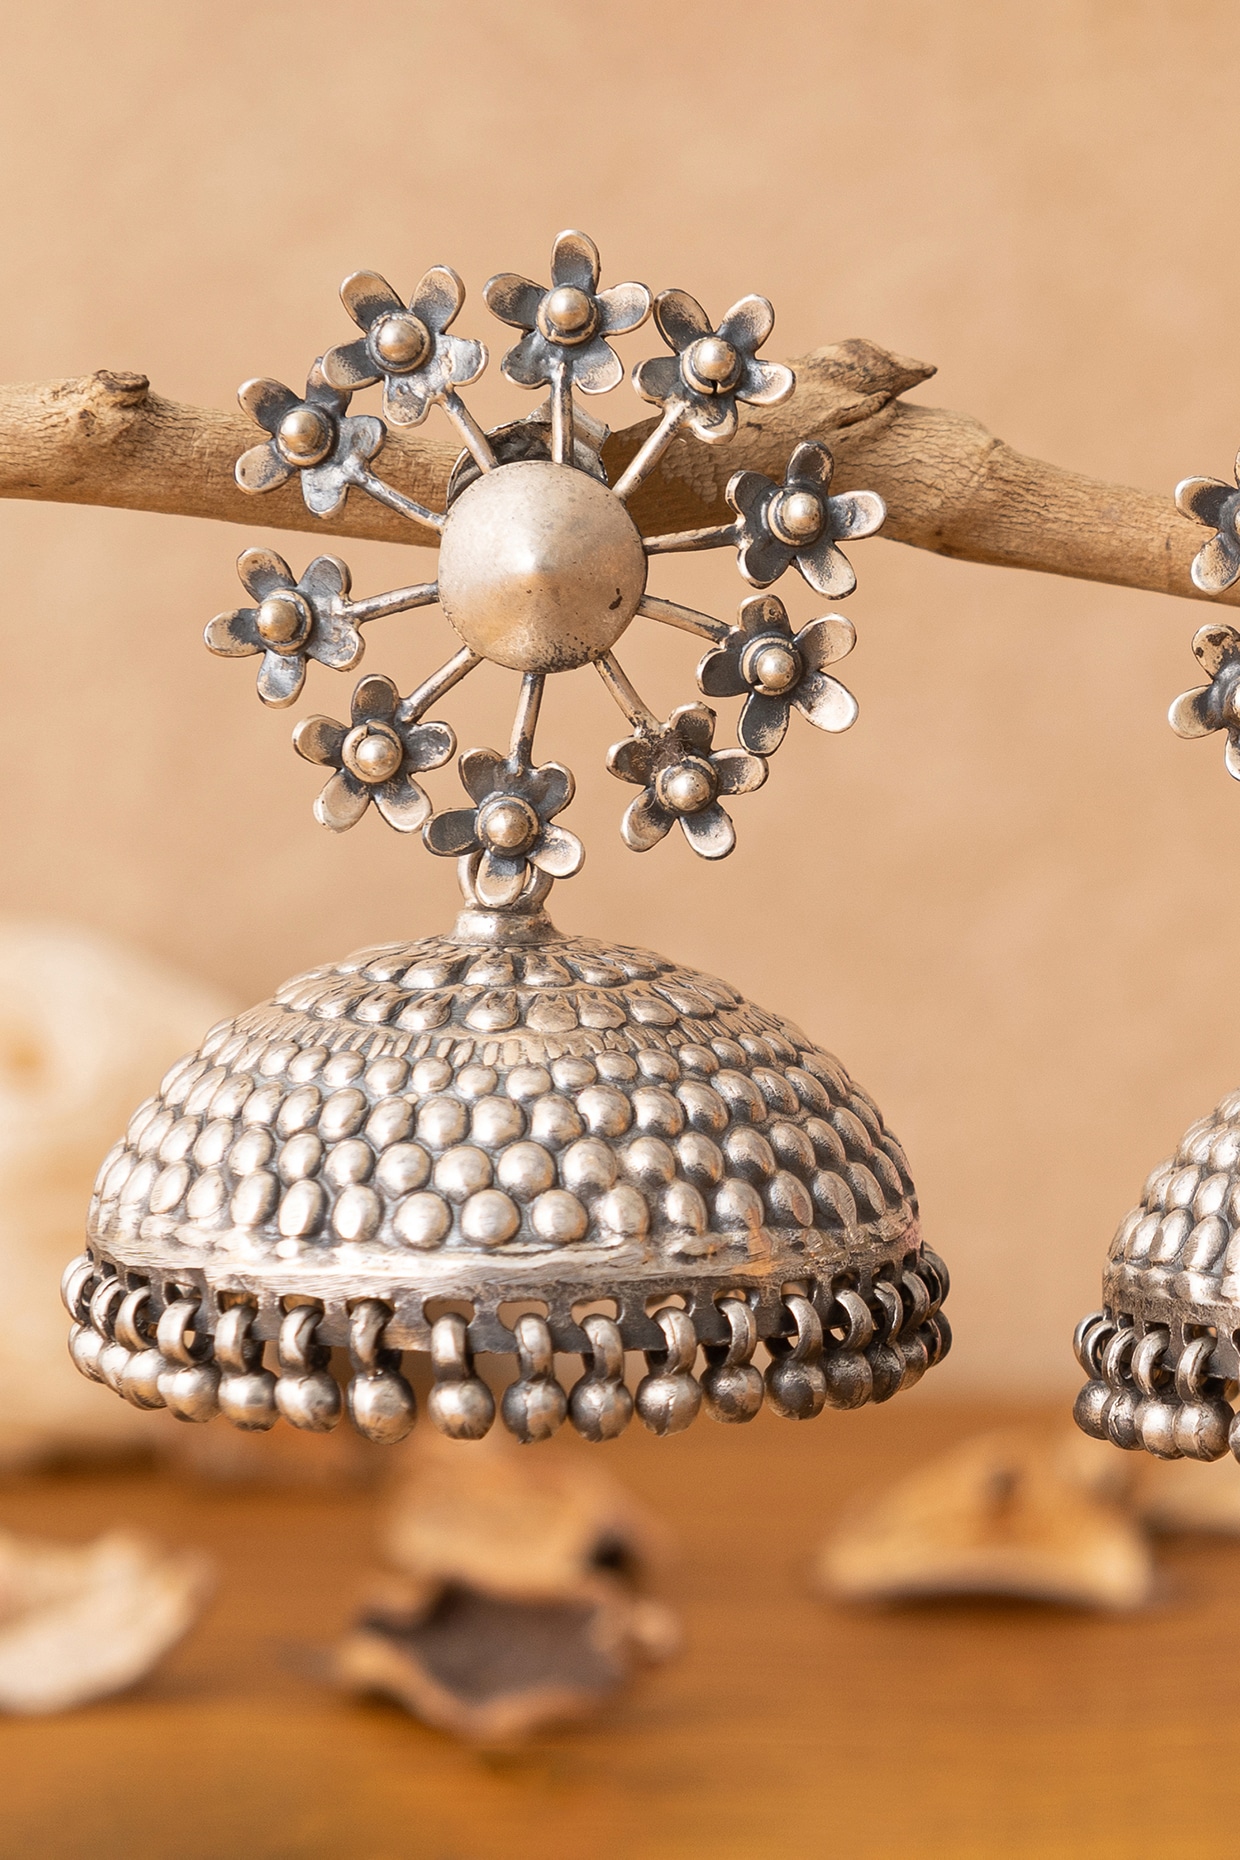 Peacock Design Silver Earring With Pearls on Edge - Earrings, Jewellery -  FOLKWAYS